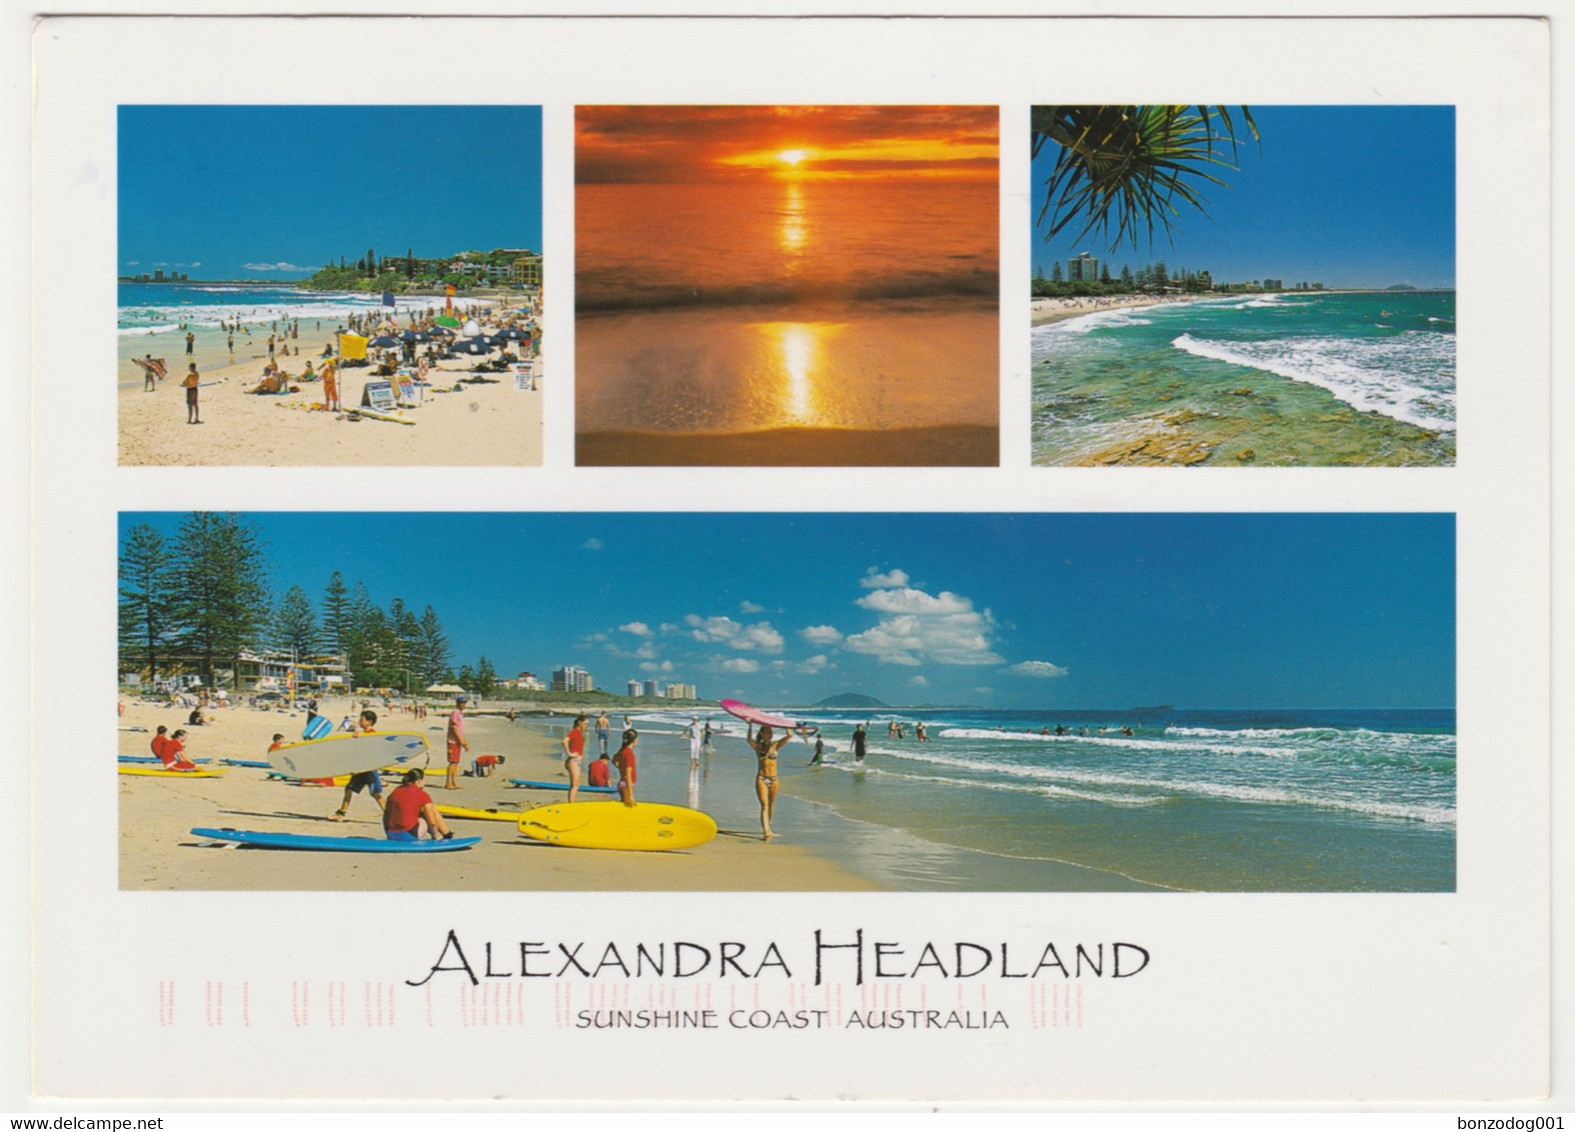 Alexandra Headland, Sunshine Coast, Queensland, Australia. Multiview - Sunshine Coast